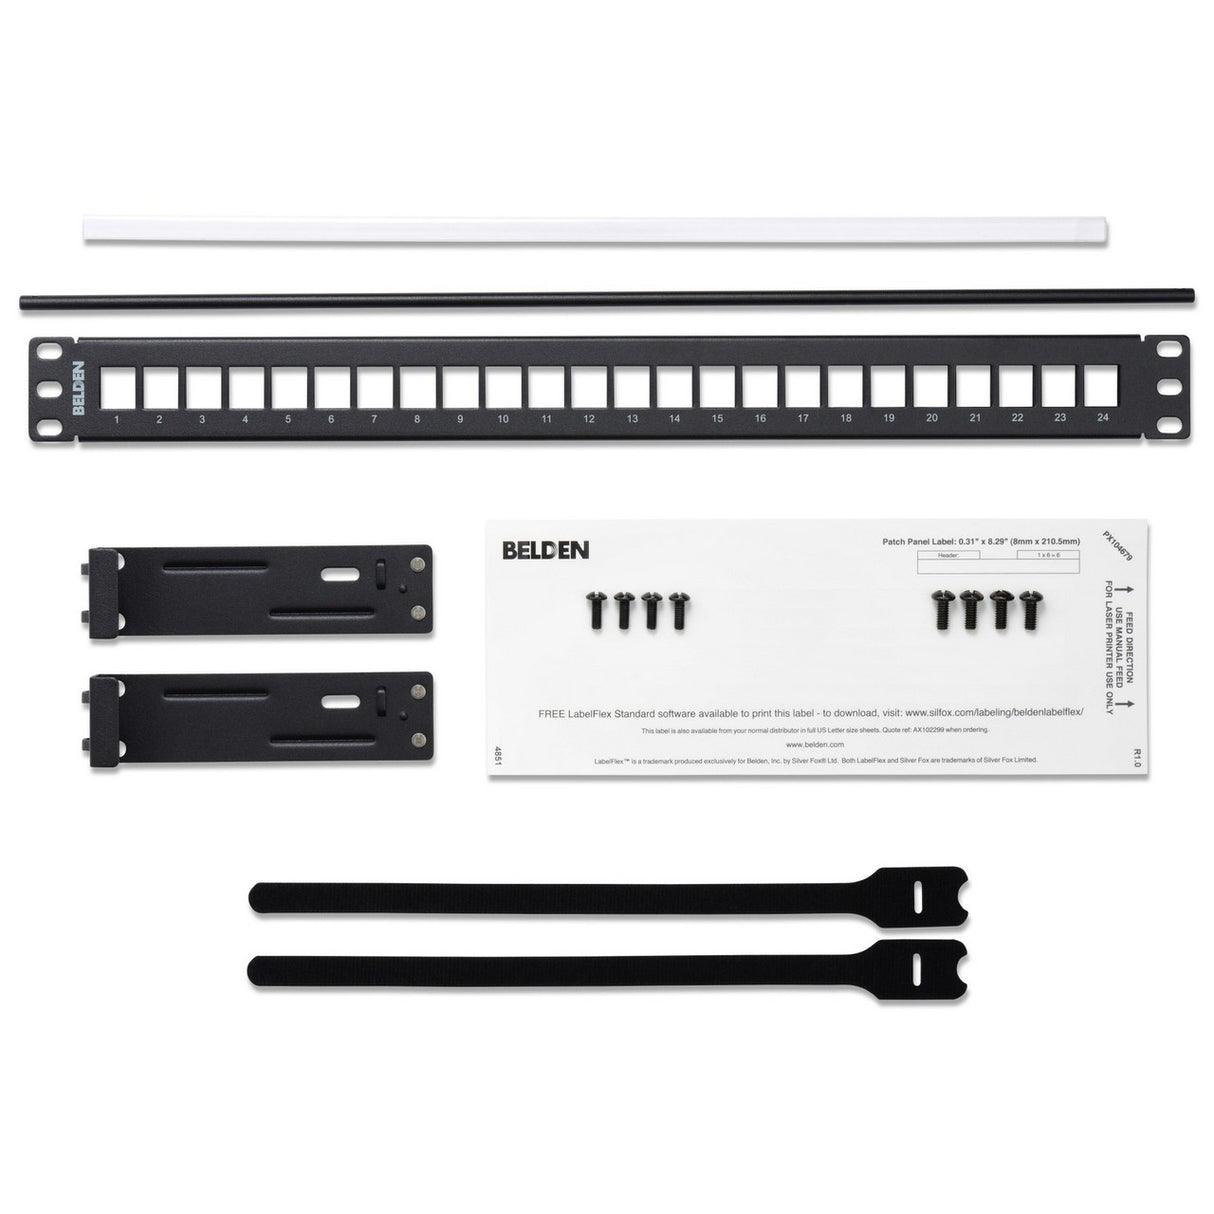 Belden AX103114 | 24 Port 1RU KeyConnect Modular Blank Patch Panel Black